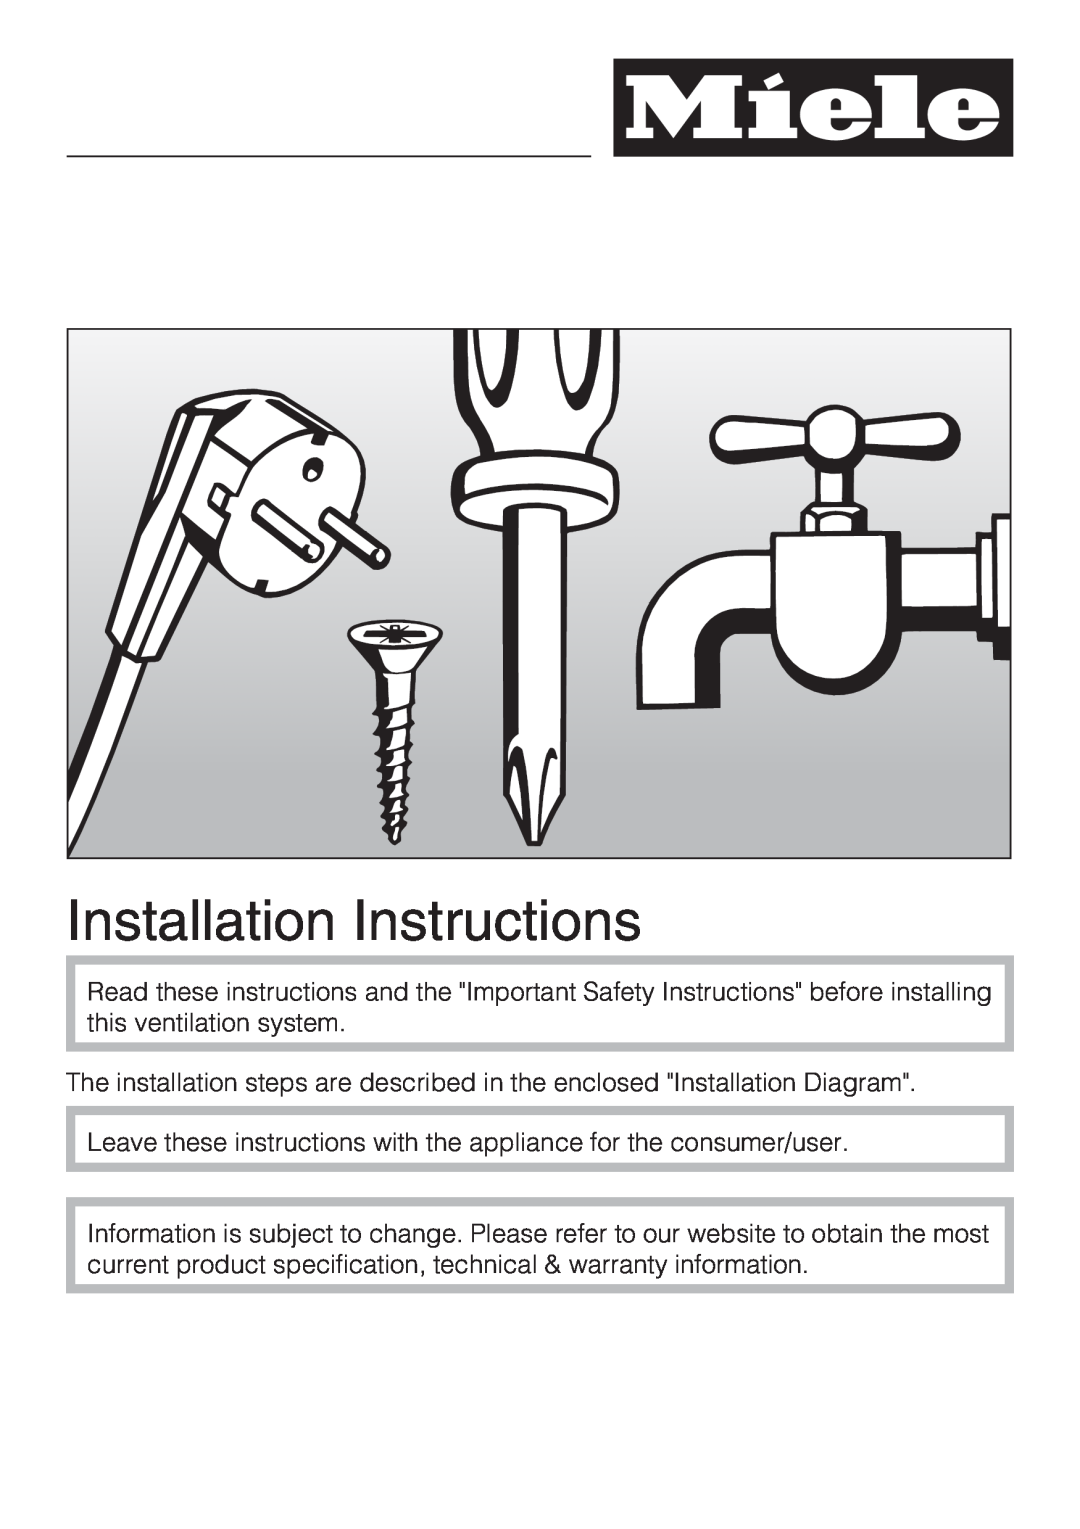 Miele DA 6590 D installation instructions Installation Instructions 